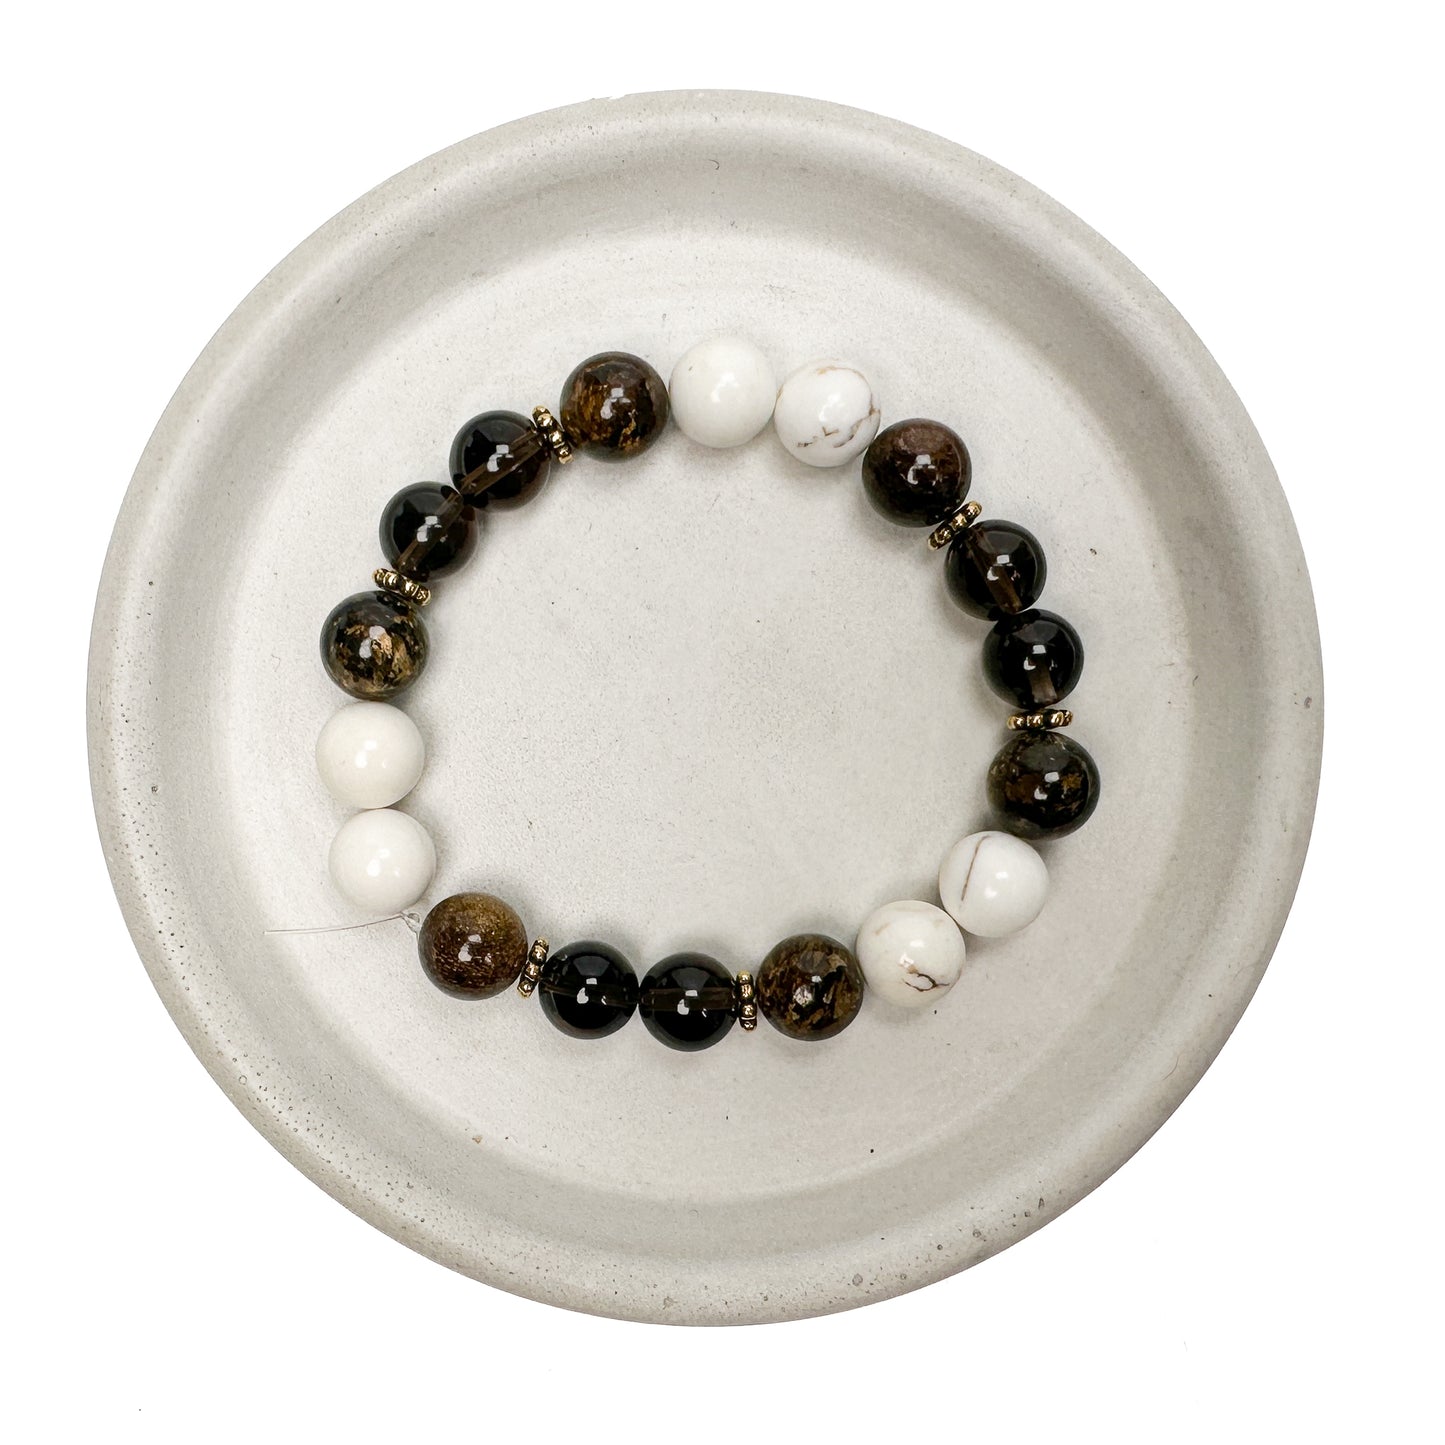 Earth Horoscope Gemstone Bead Mix #2 - 18 pcs.-The Bead Gallery Honolulu